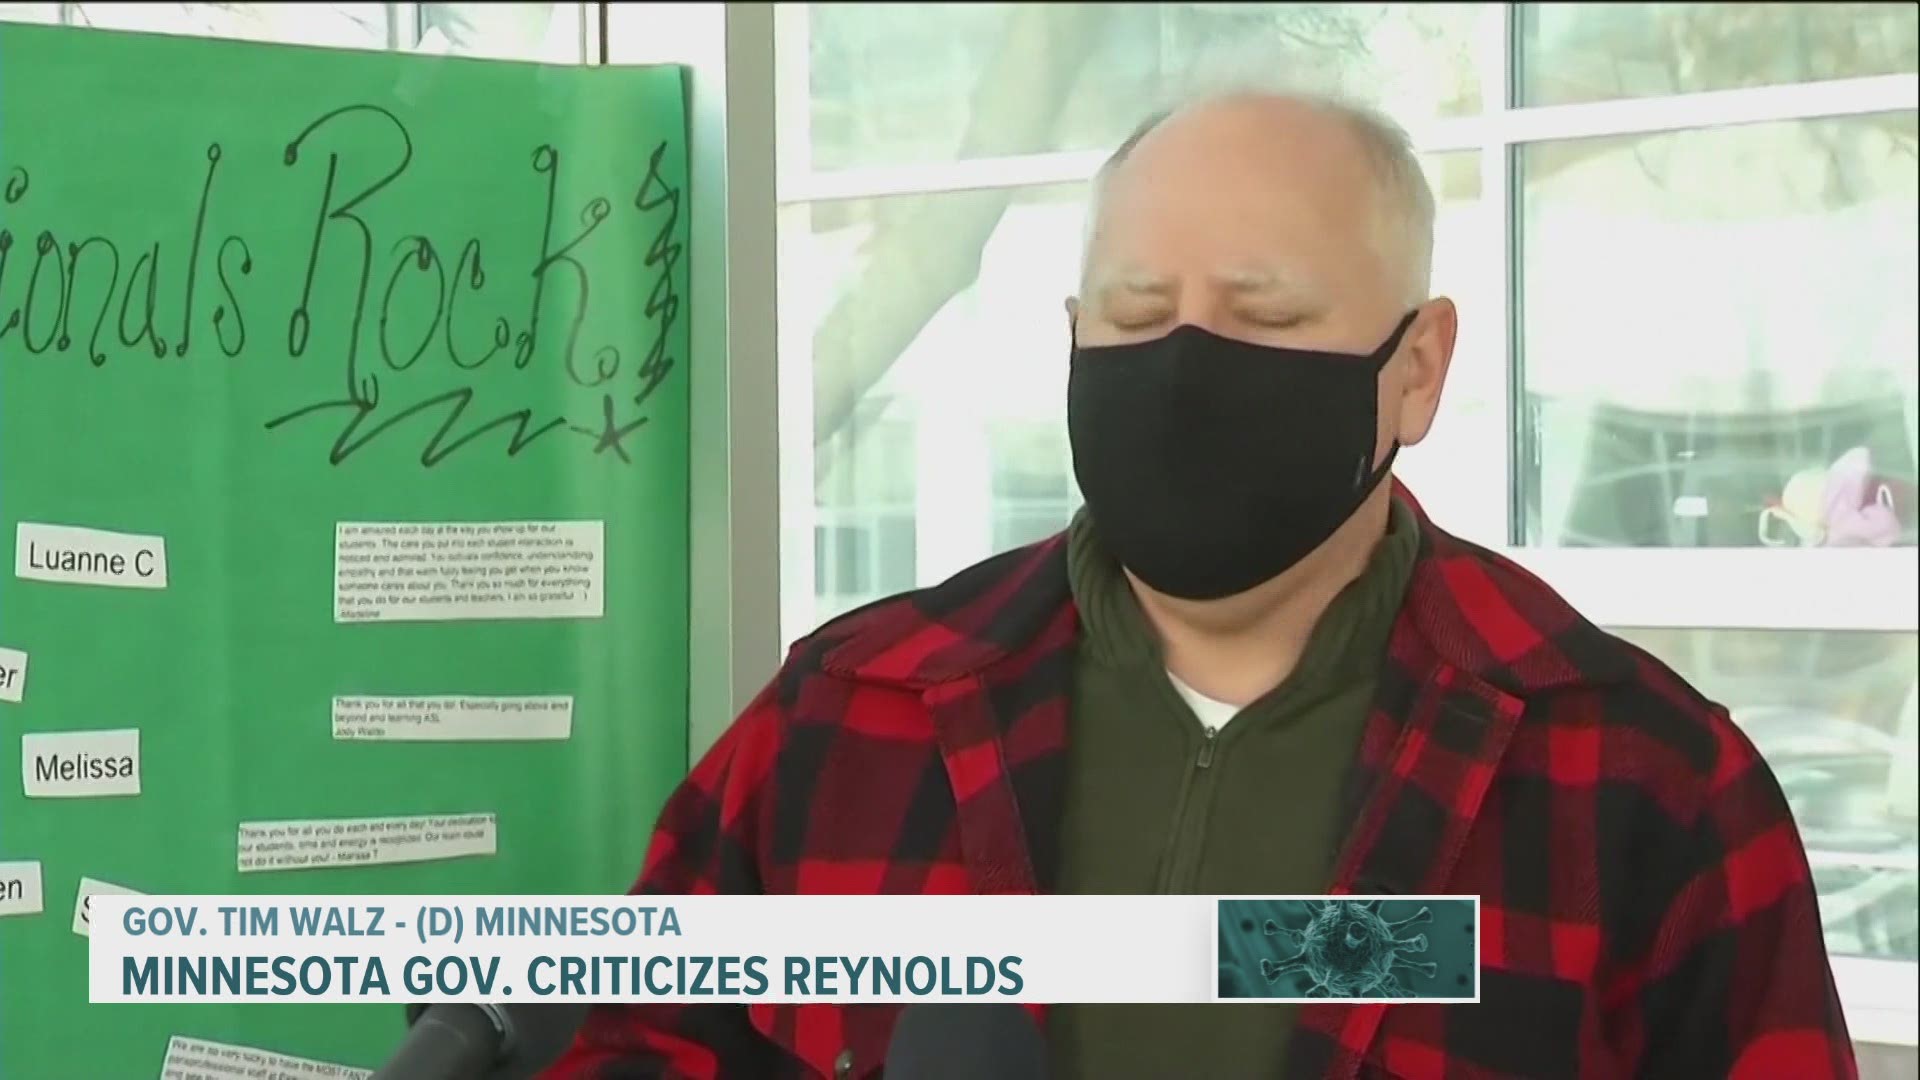 MN Gov. Tim Walz criticizes Gov. Kim Reynolds for lifting mask mandate and restaurant restrictions.